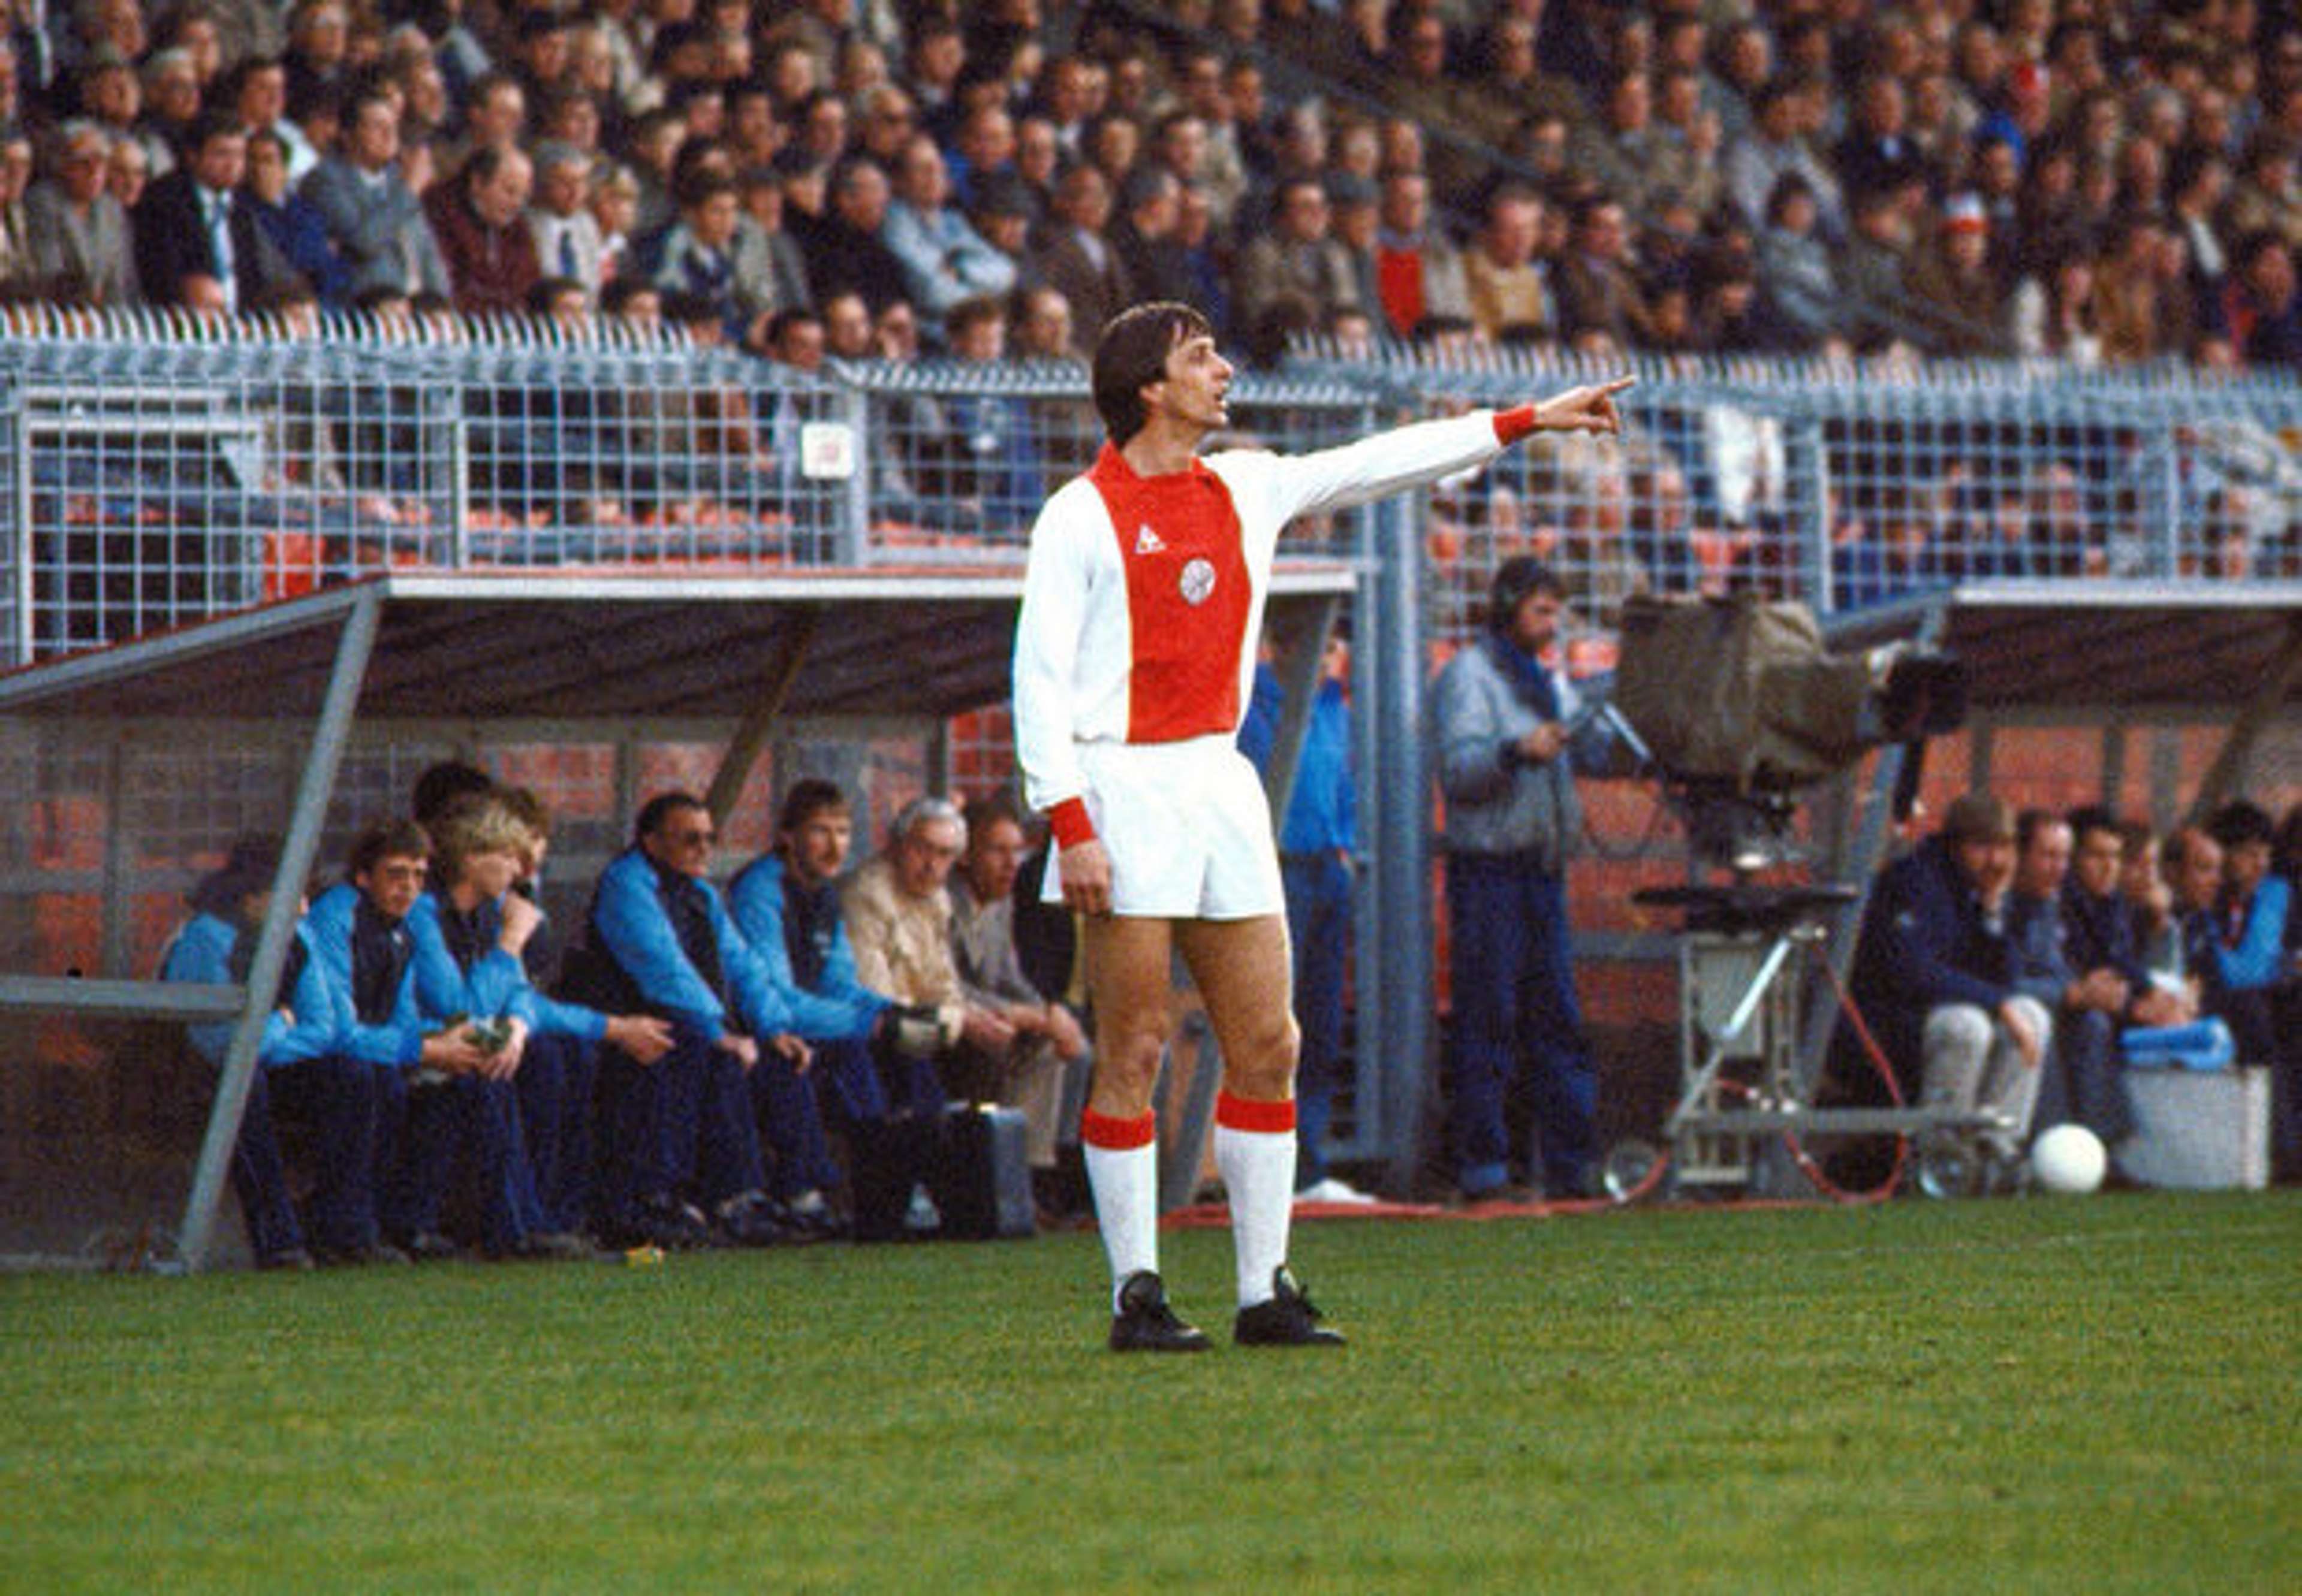 Ajax's Johan Cruyff